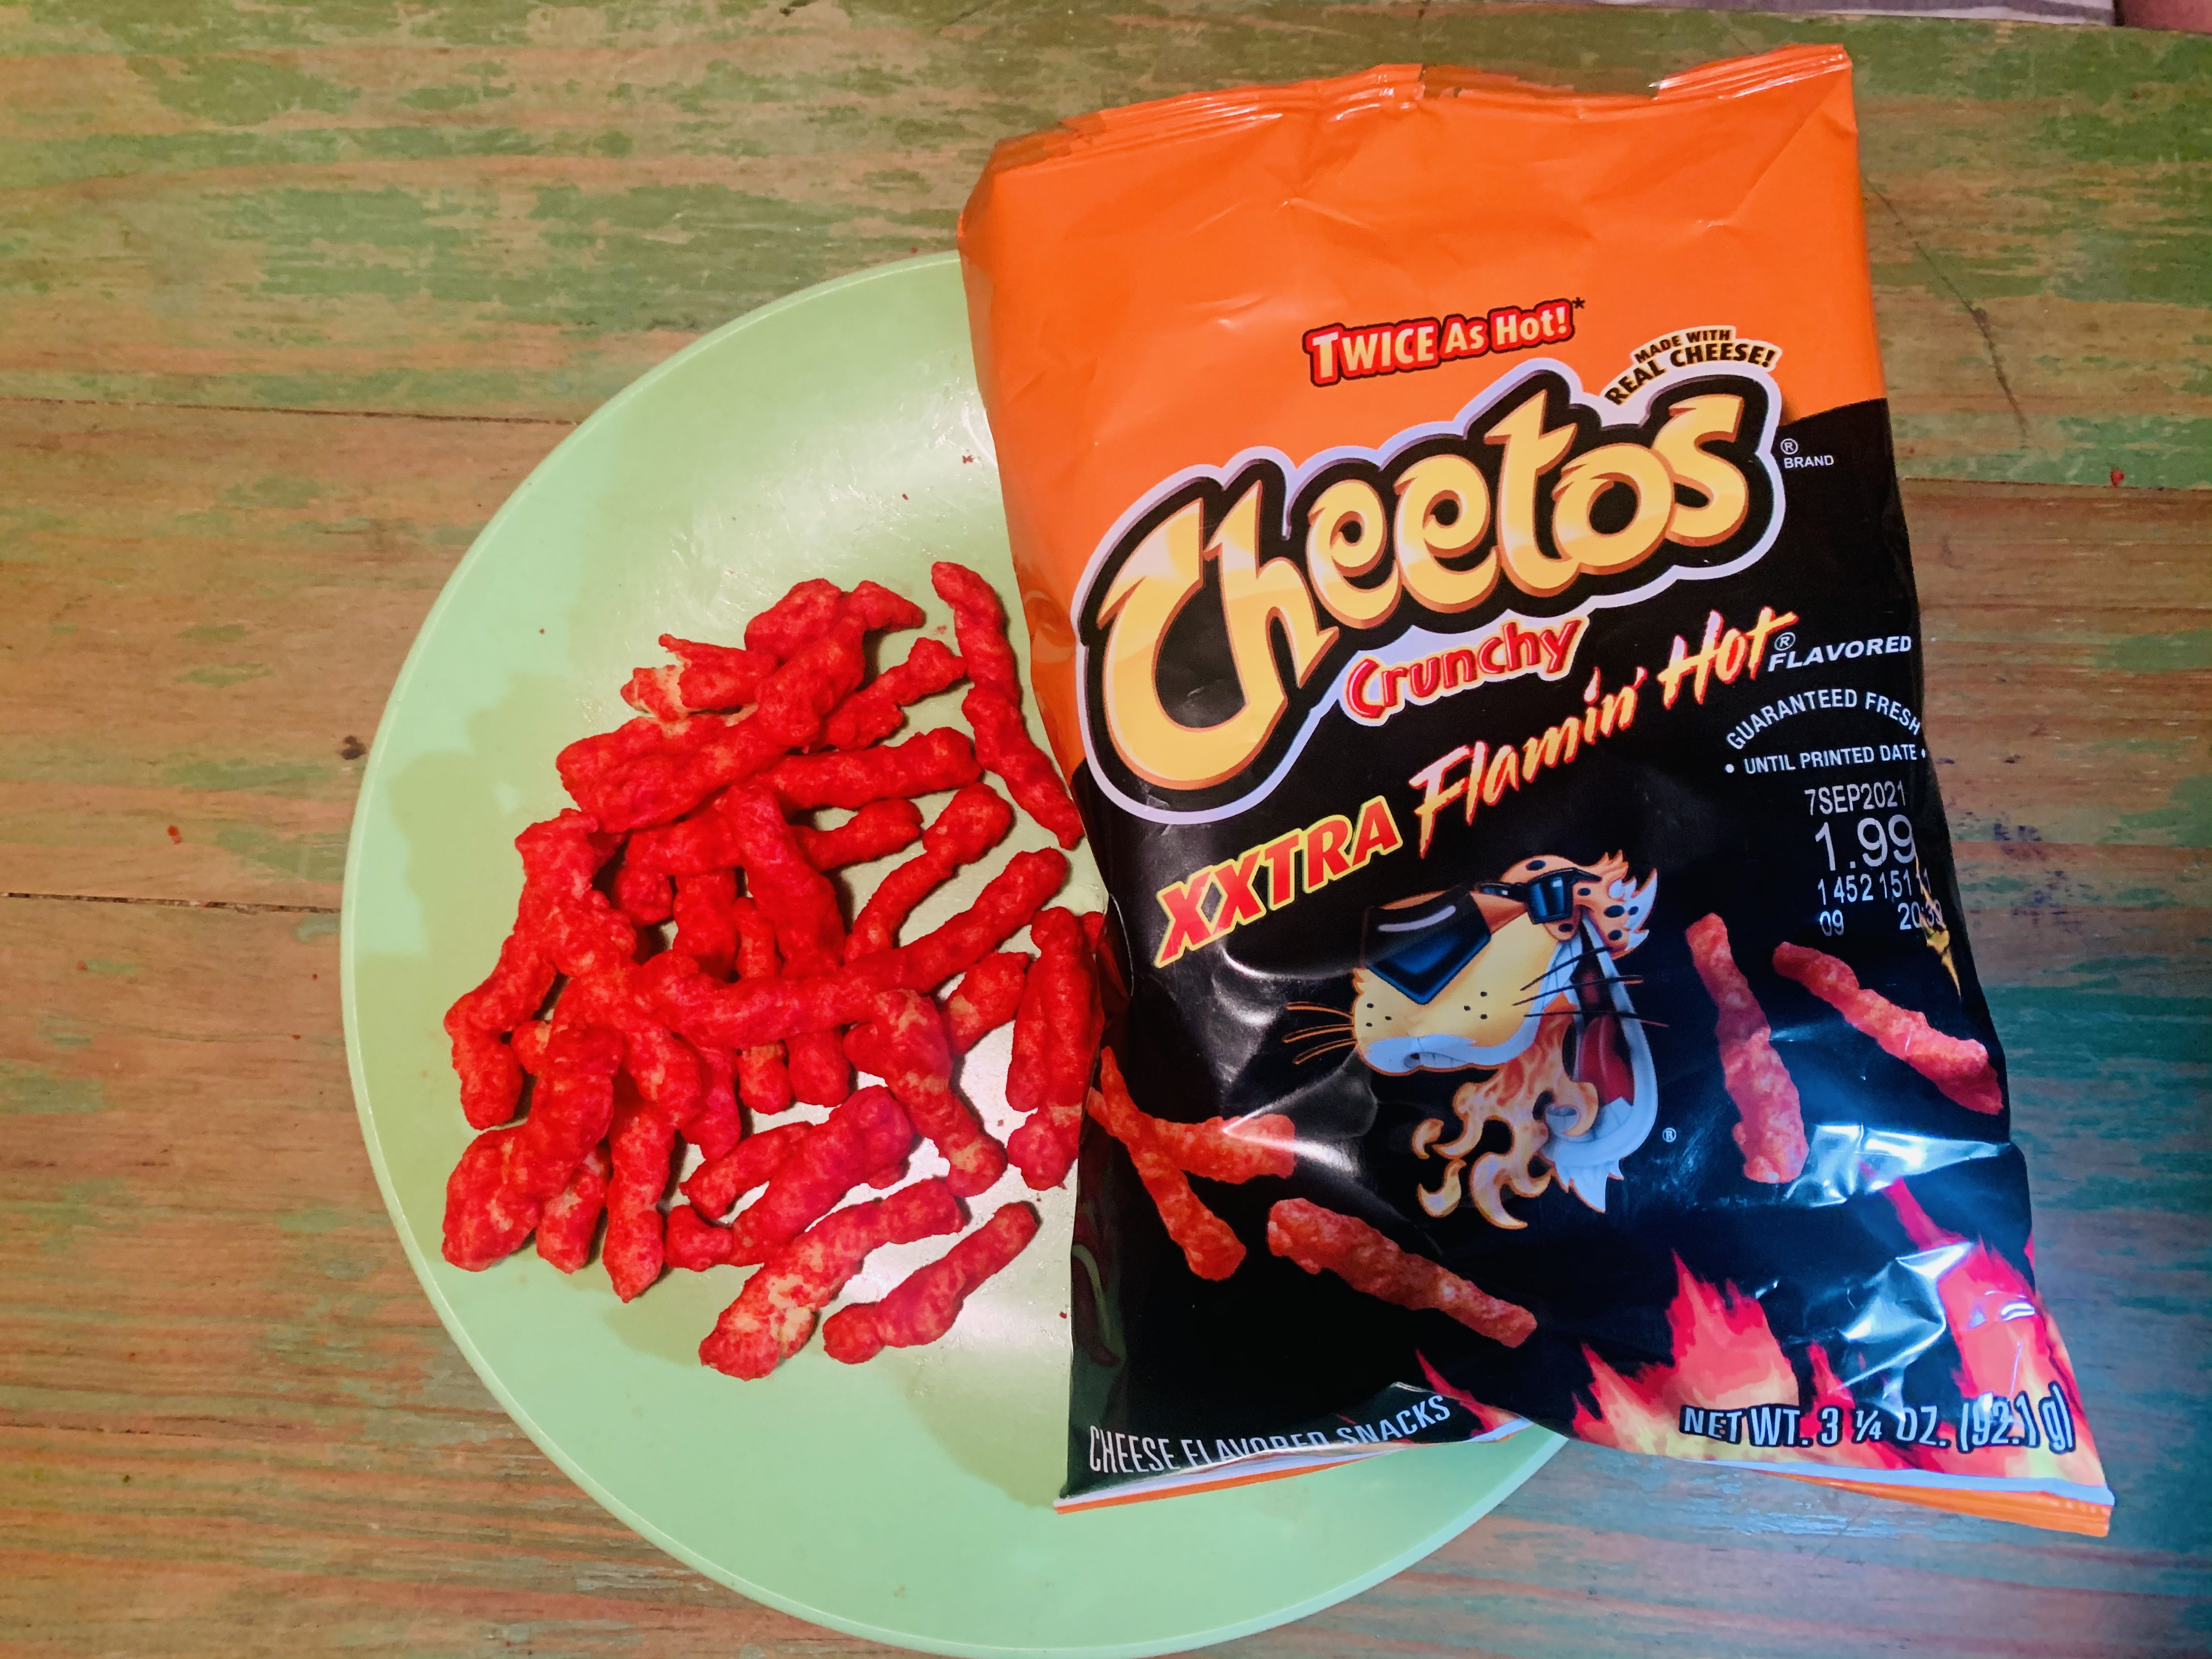 The Best Cheetos Flavor Isn't Flamin' Hot